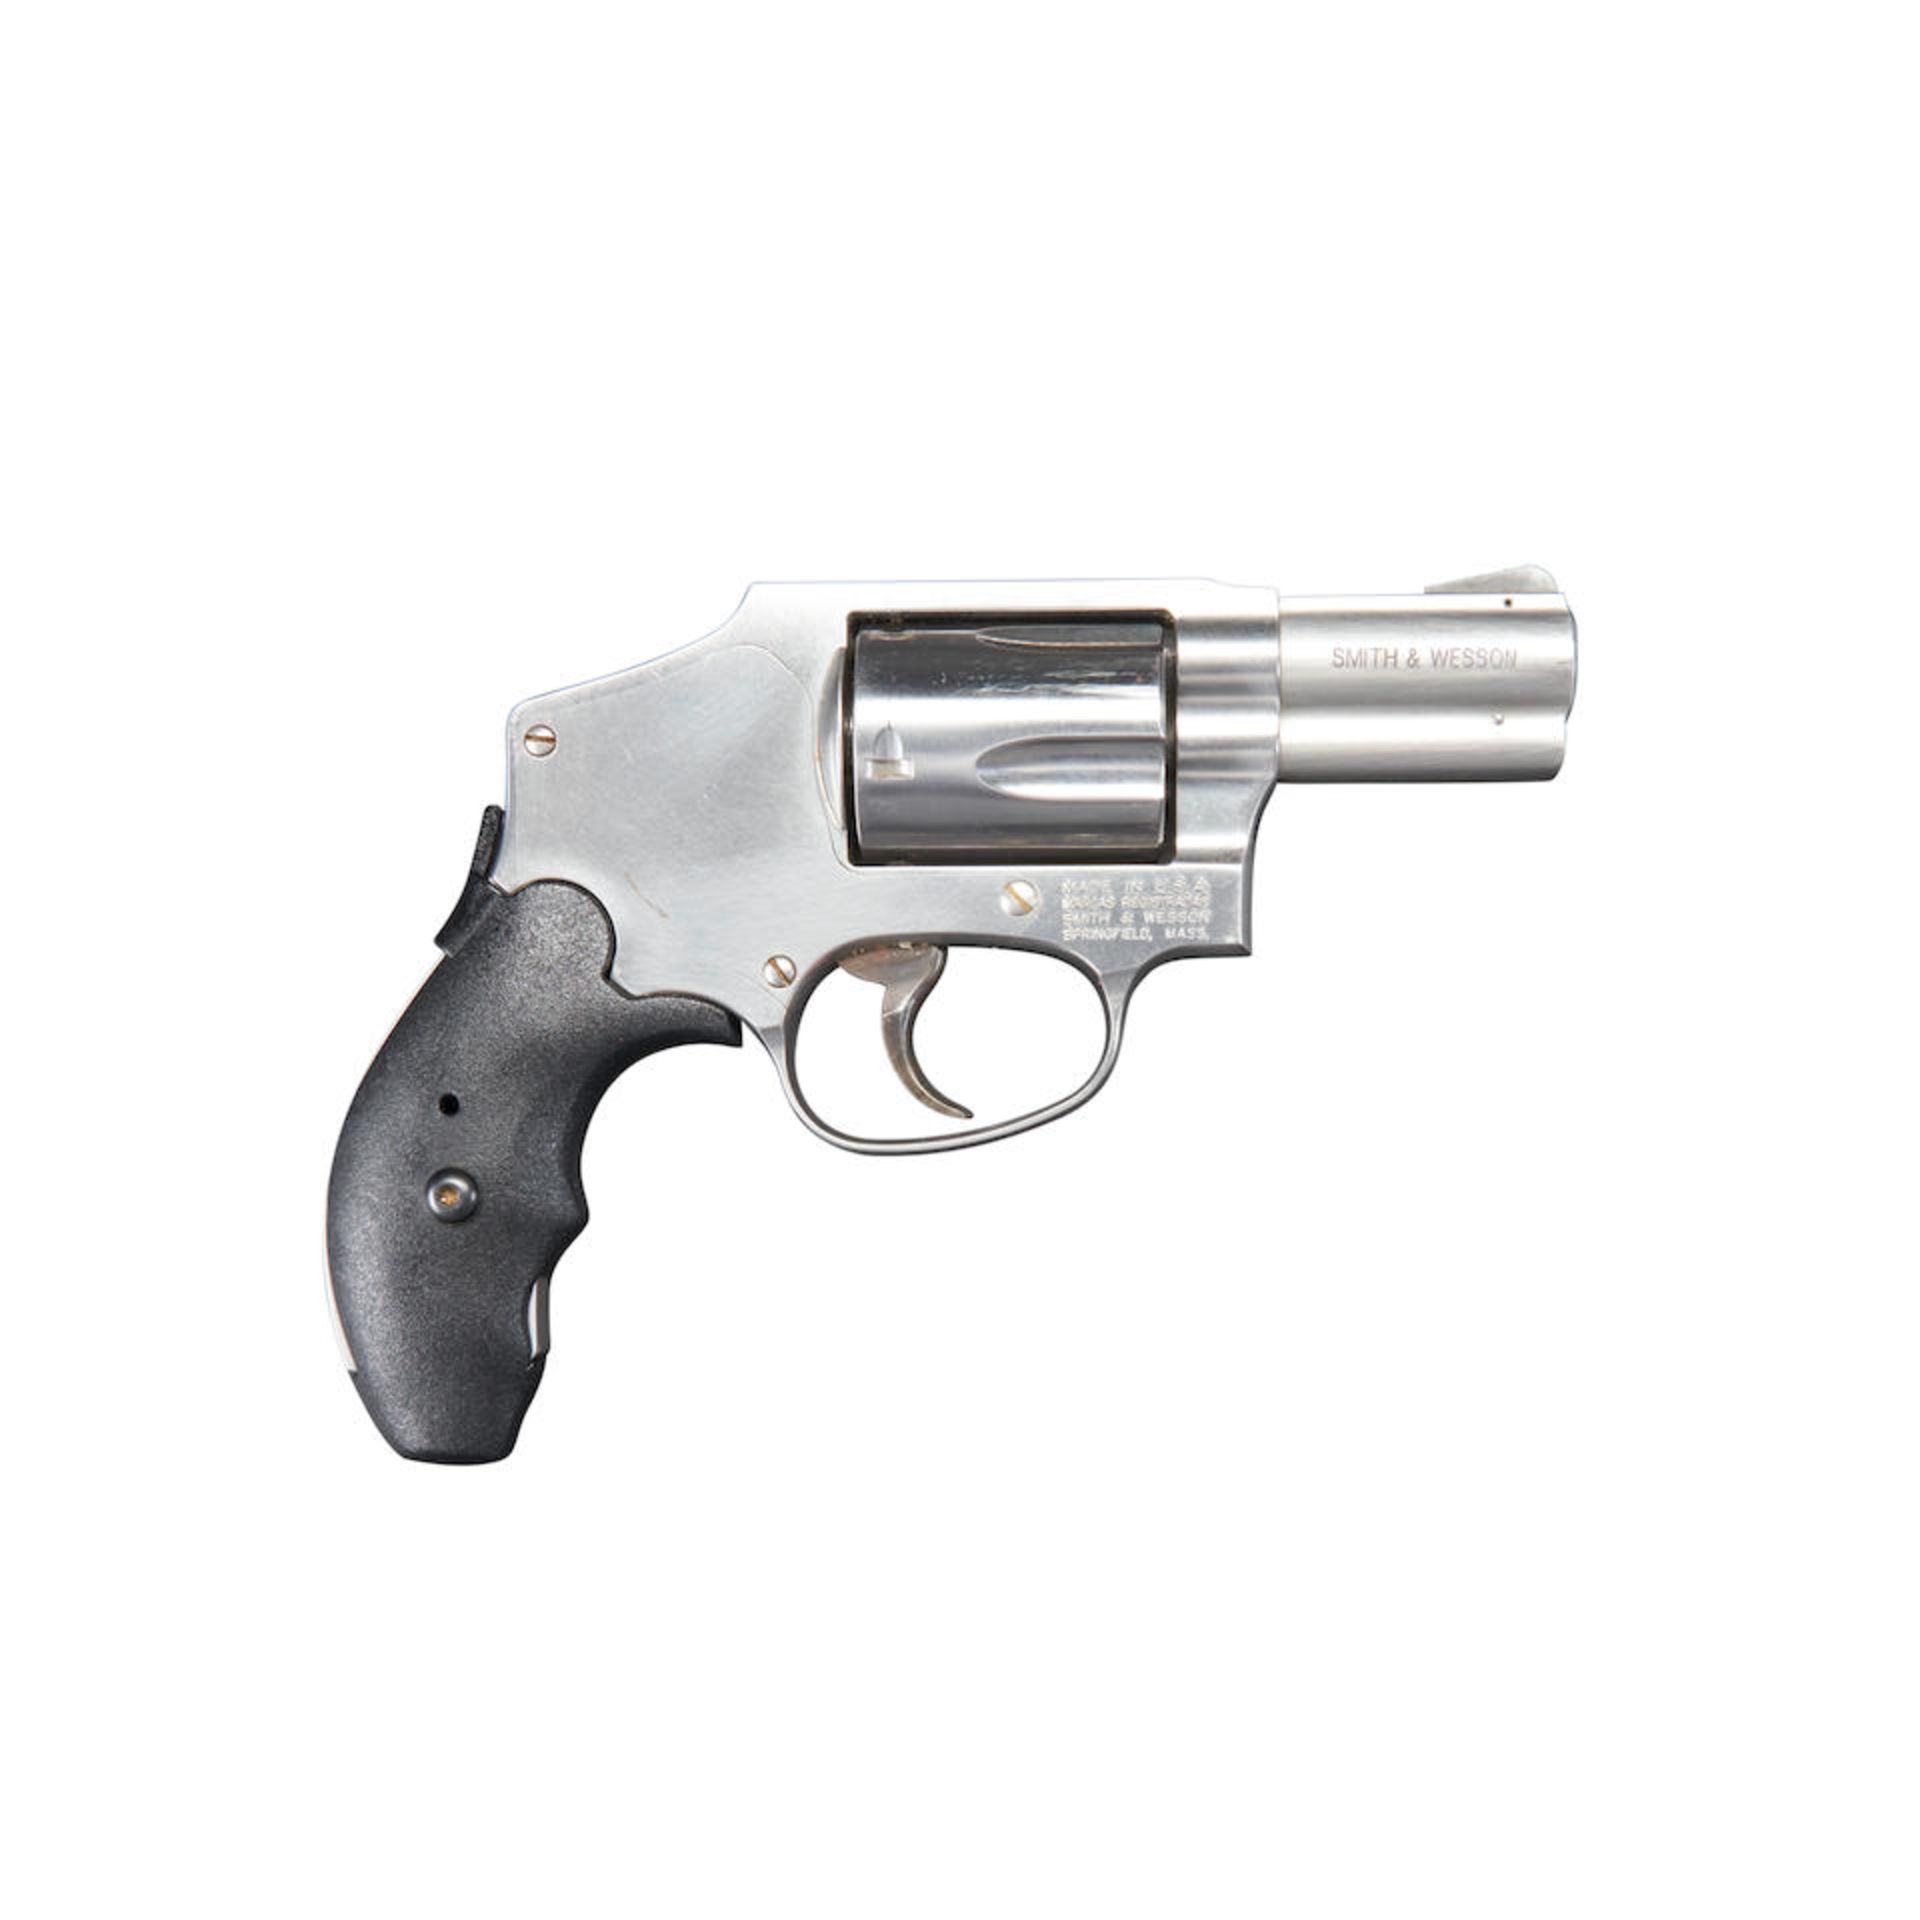 Smith & Wesson Model 640-3 Double Action Revolver, Modern handgun